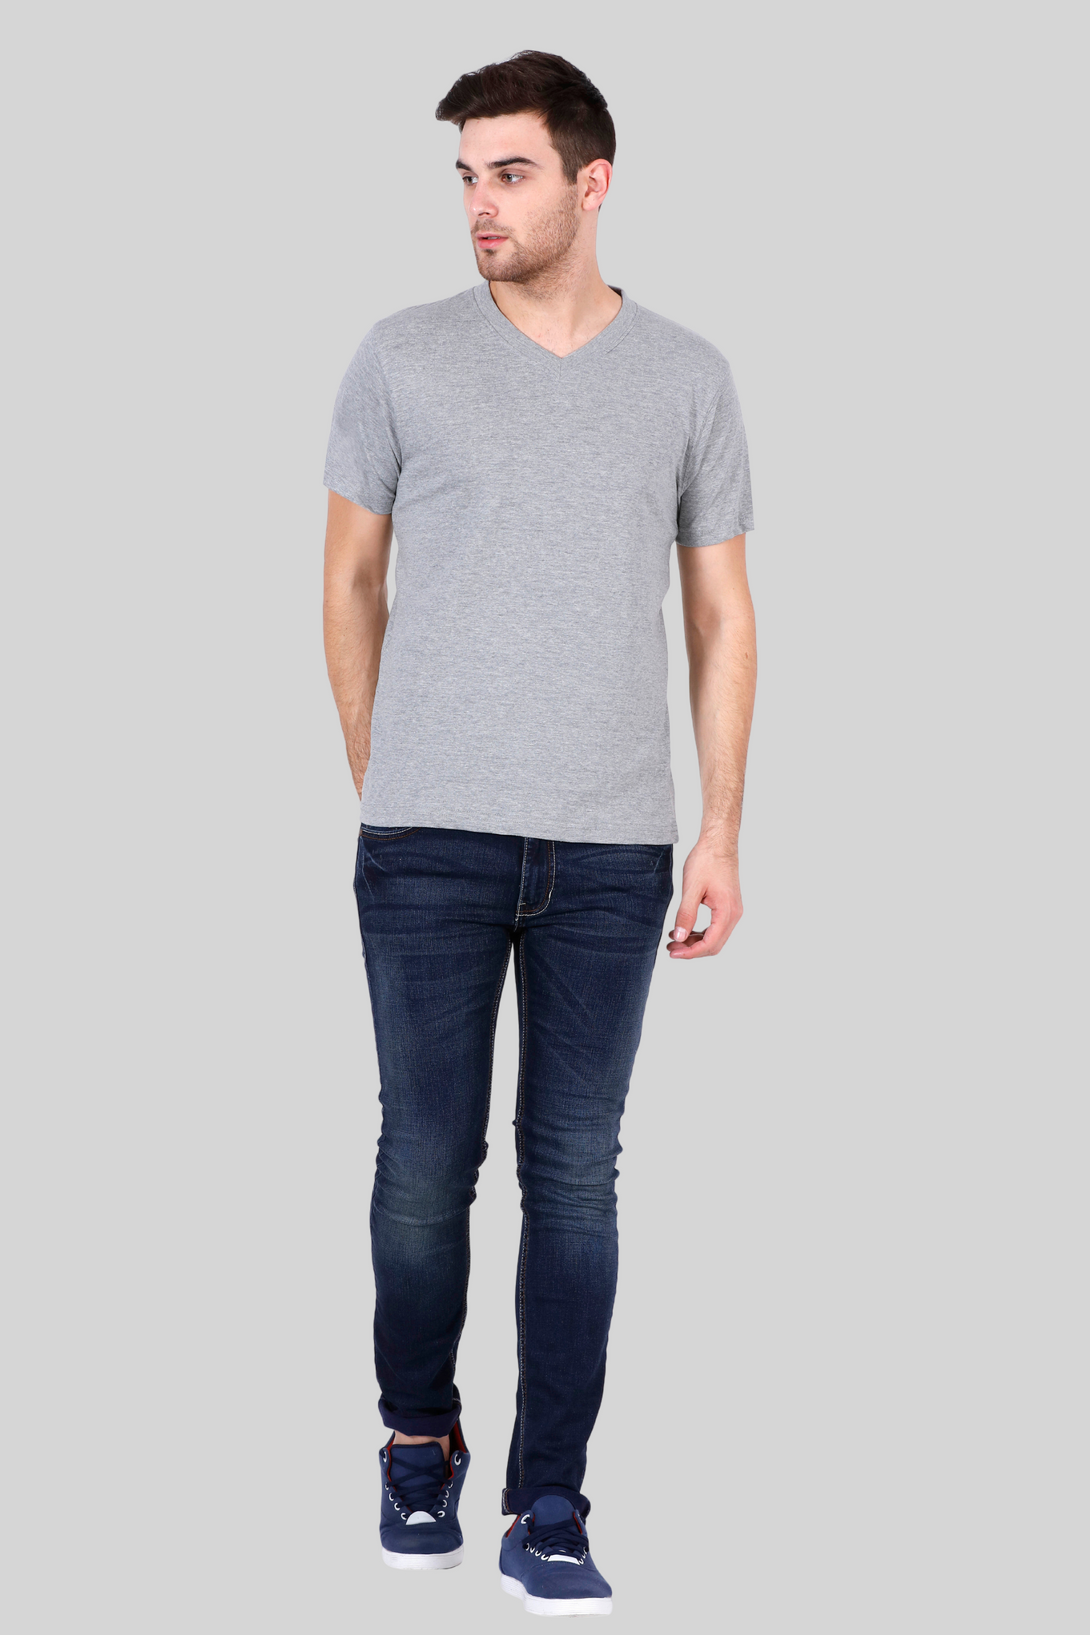 Grey Melange V Neck T-Shirt For Men - WowWaves - 7